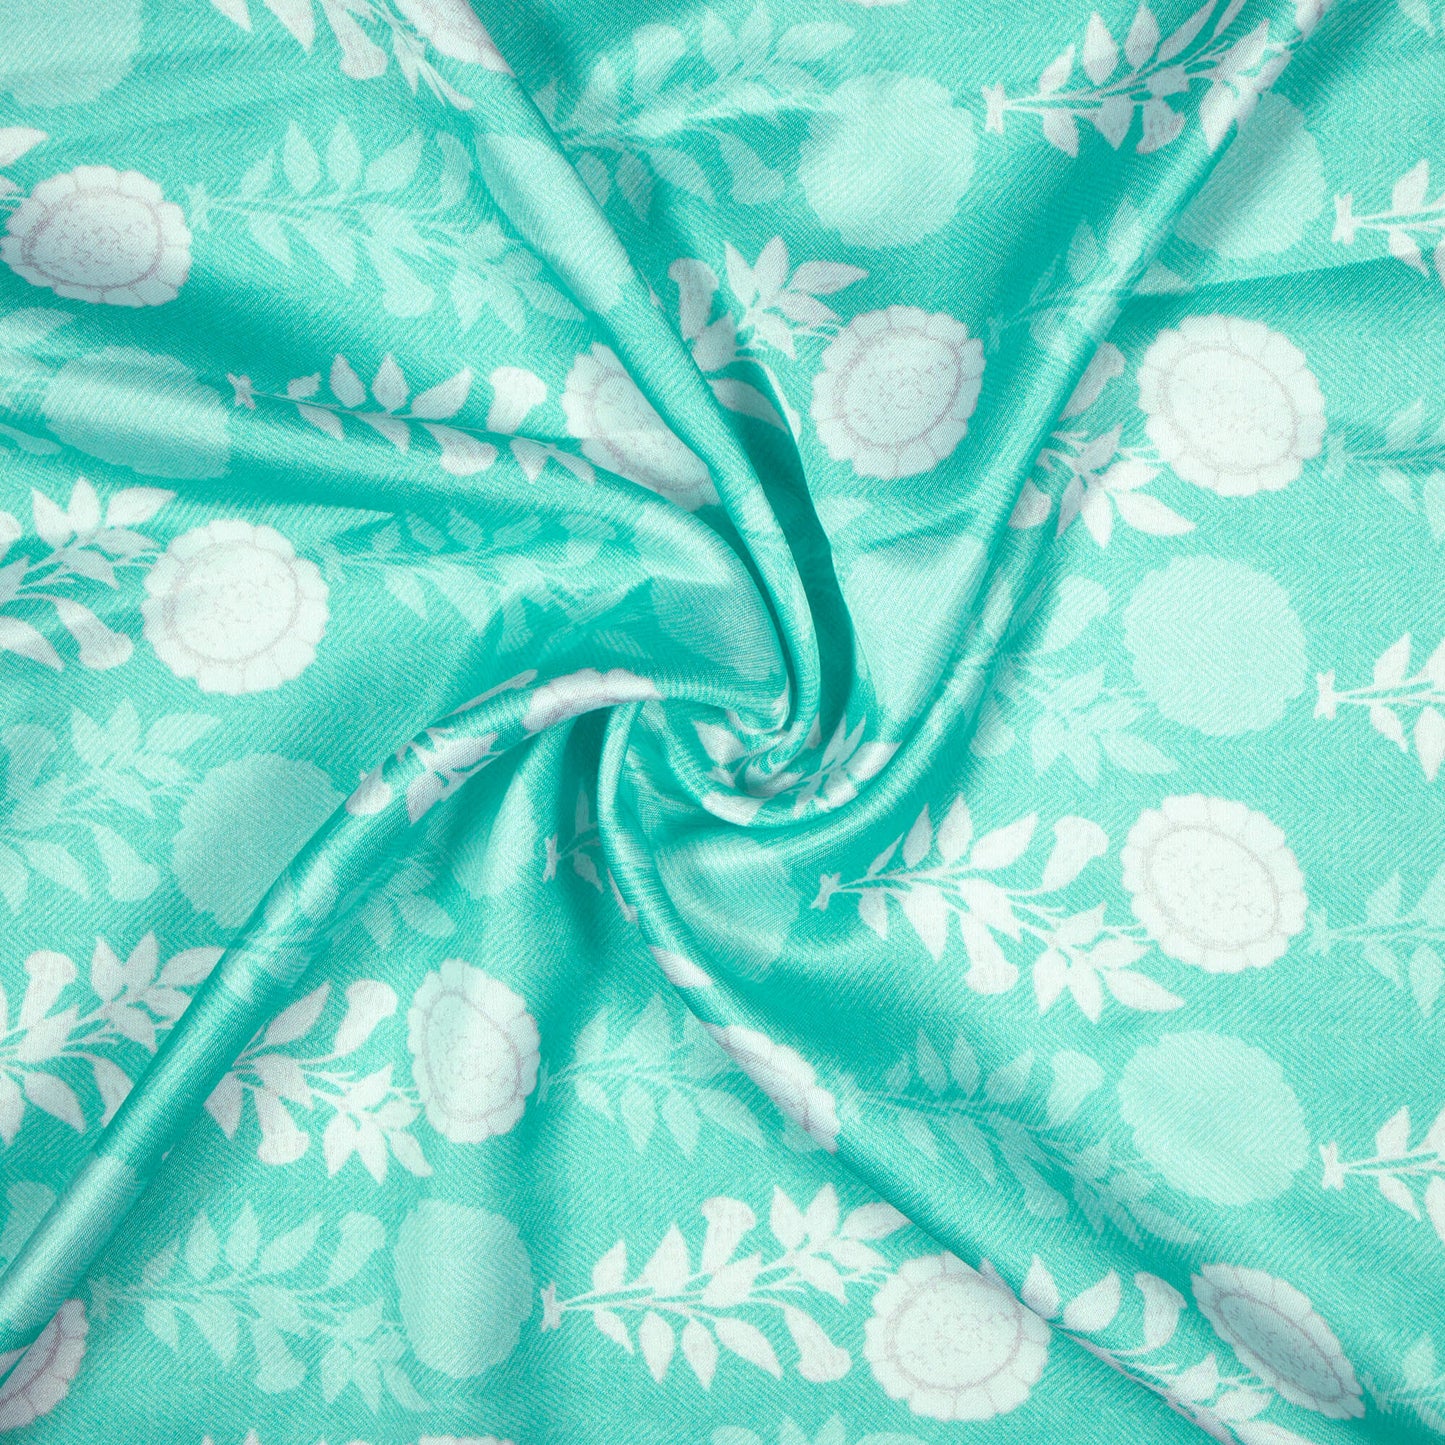 Turquoise And White Floral Pattern Digital Print Premium Lush Satin Fabric